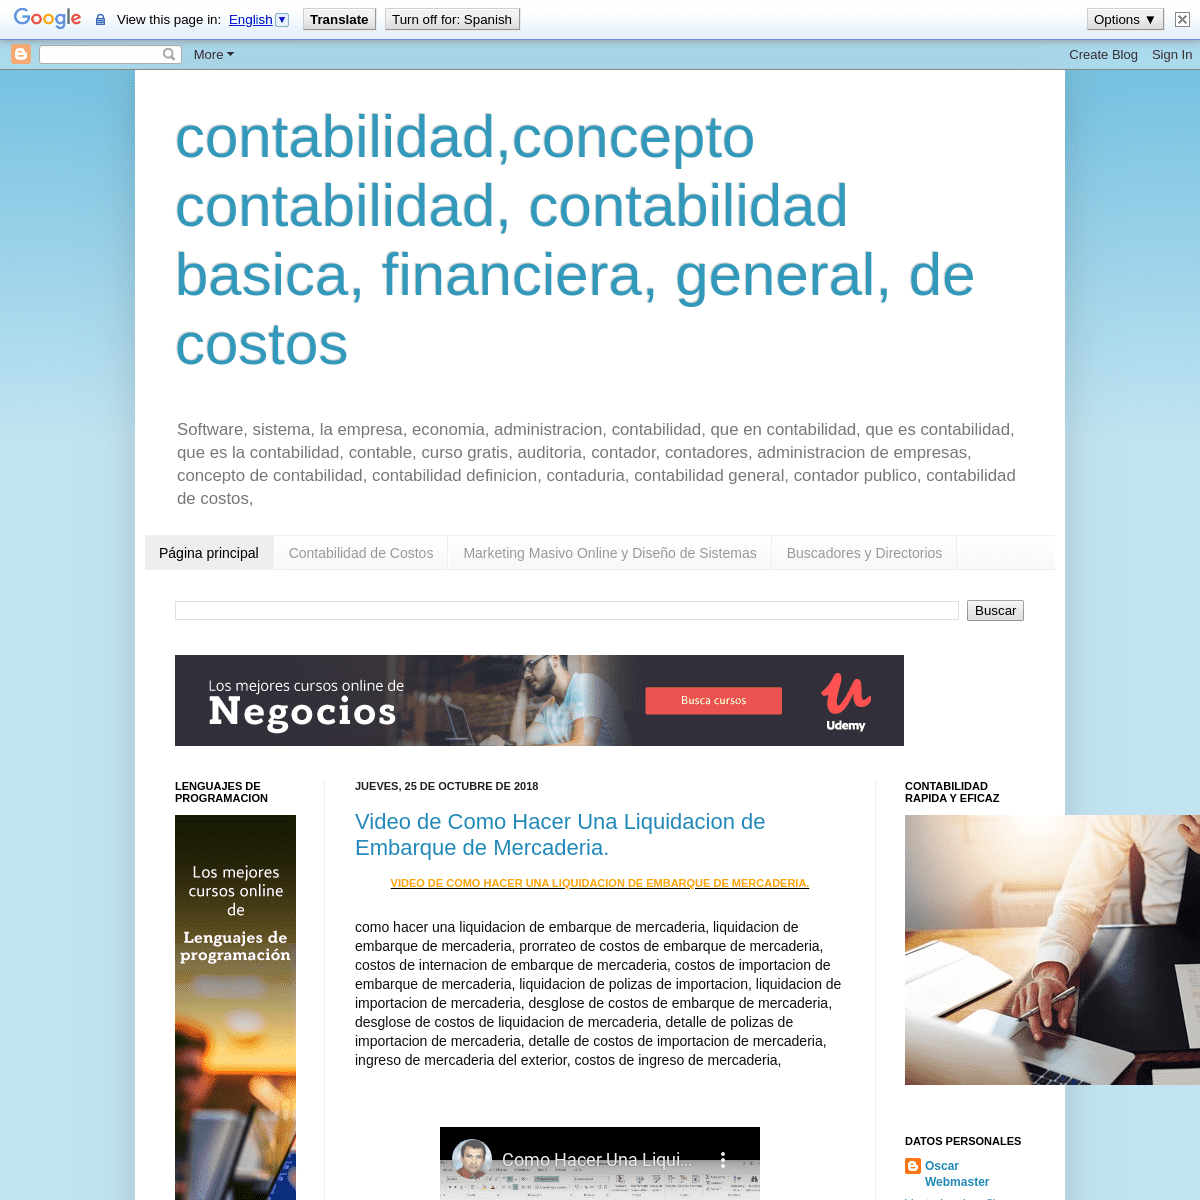 A complete backup of conceptocontabilidadbasicadecostos.blogspot.com